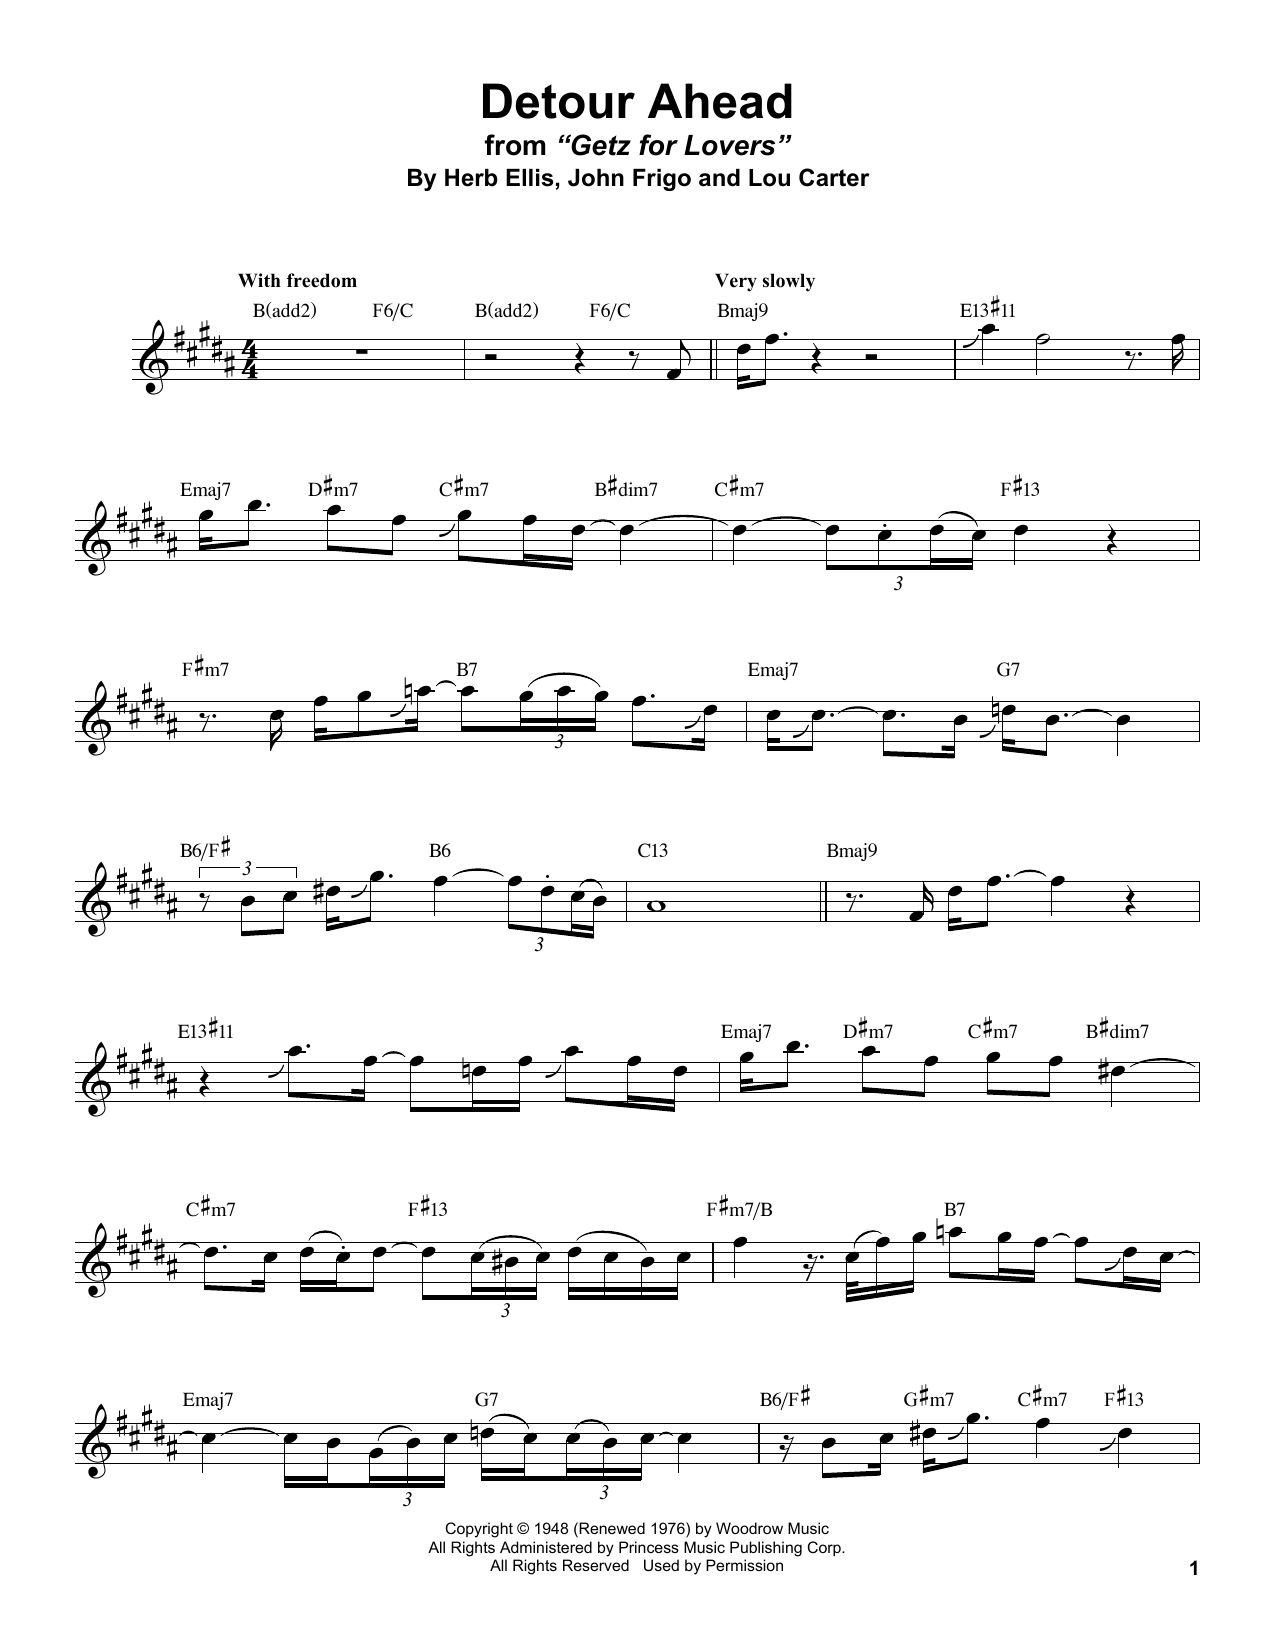 Stan Getz Detour Ahead Sheet Music Notes & Chords for Alto Sax Transcription - Download or Print PDF